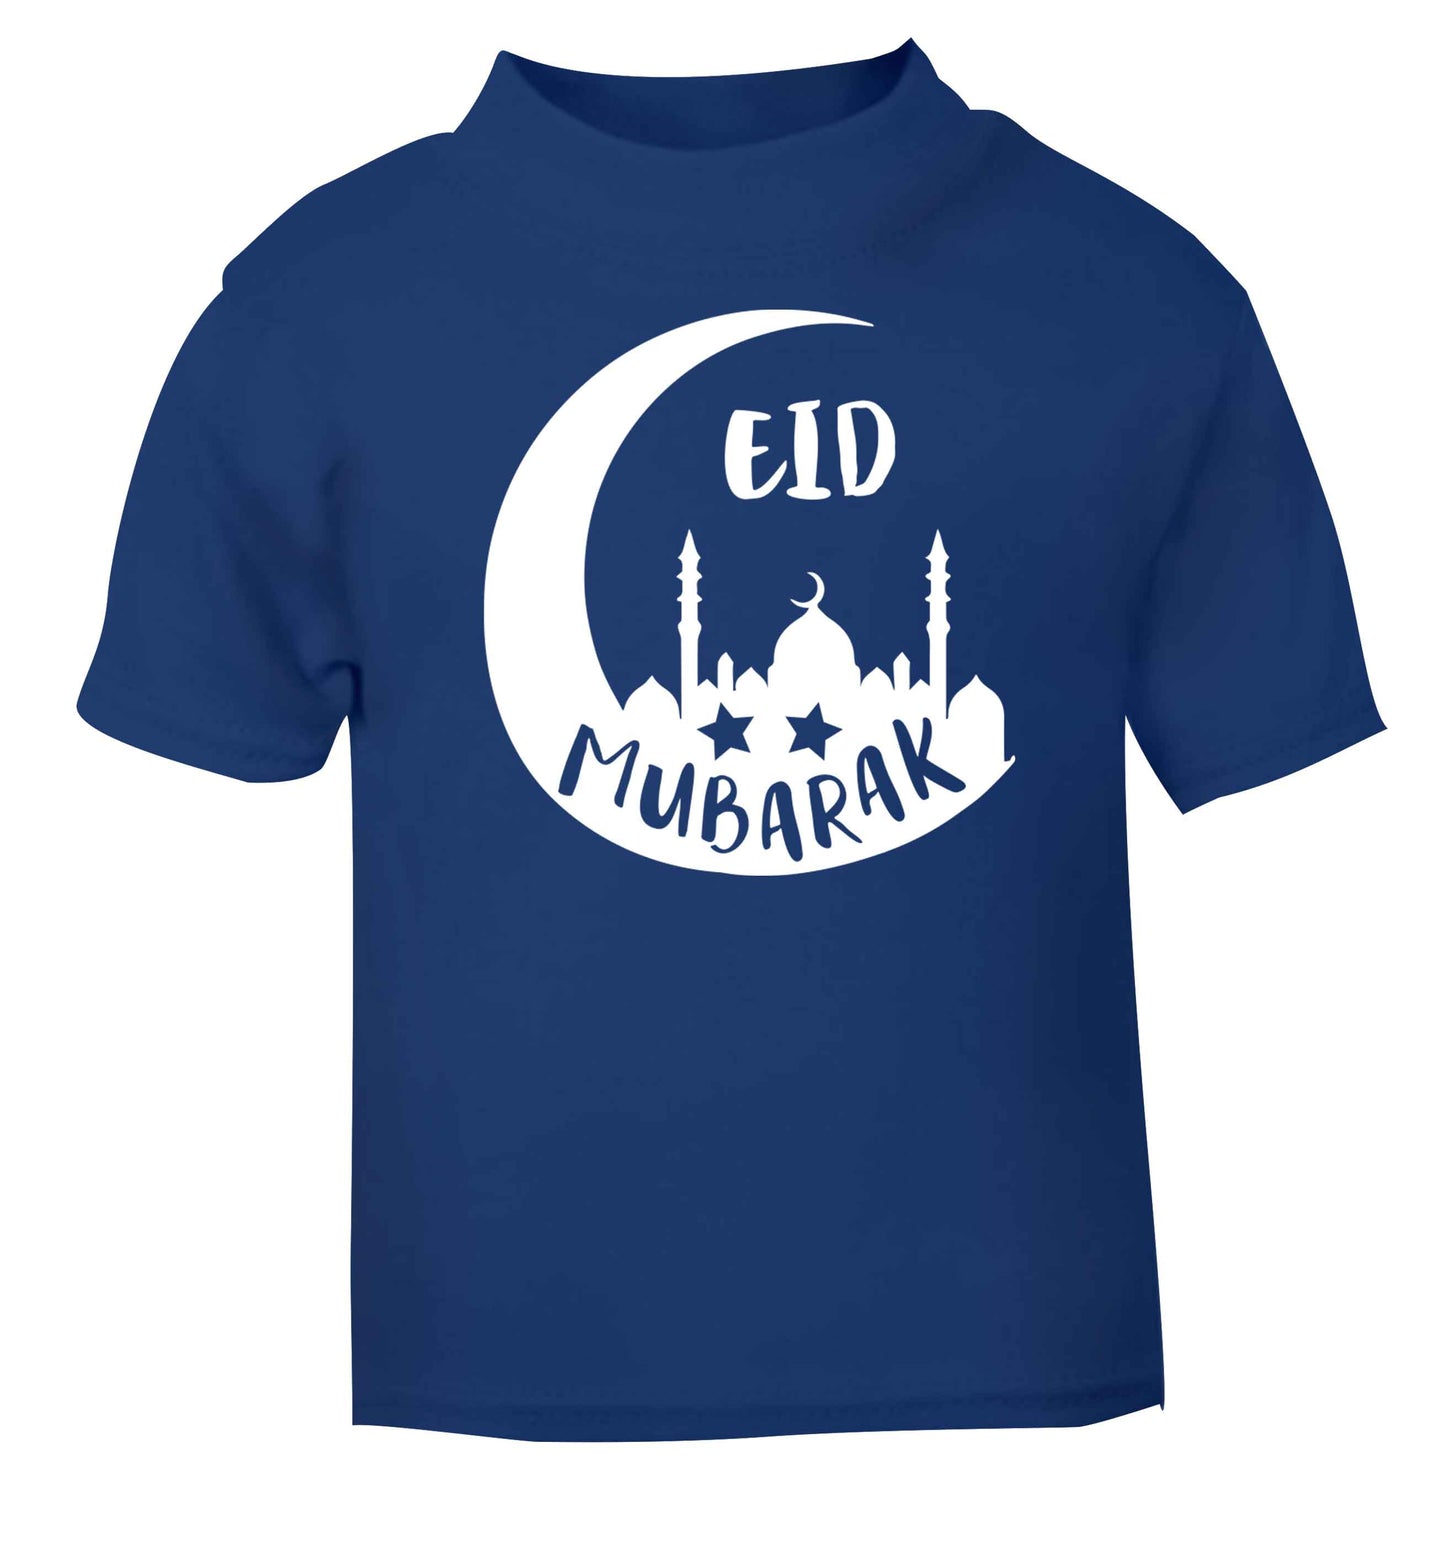 Eid mubarak blue baby toddler Tshirt 2 Years